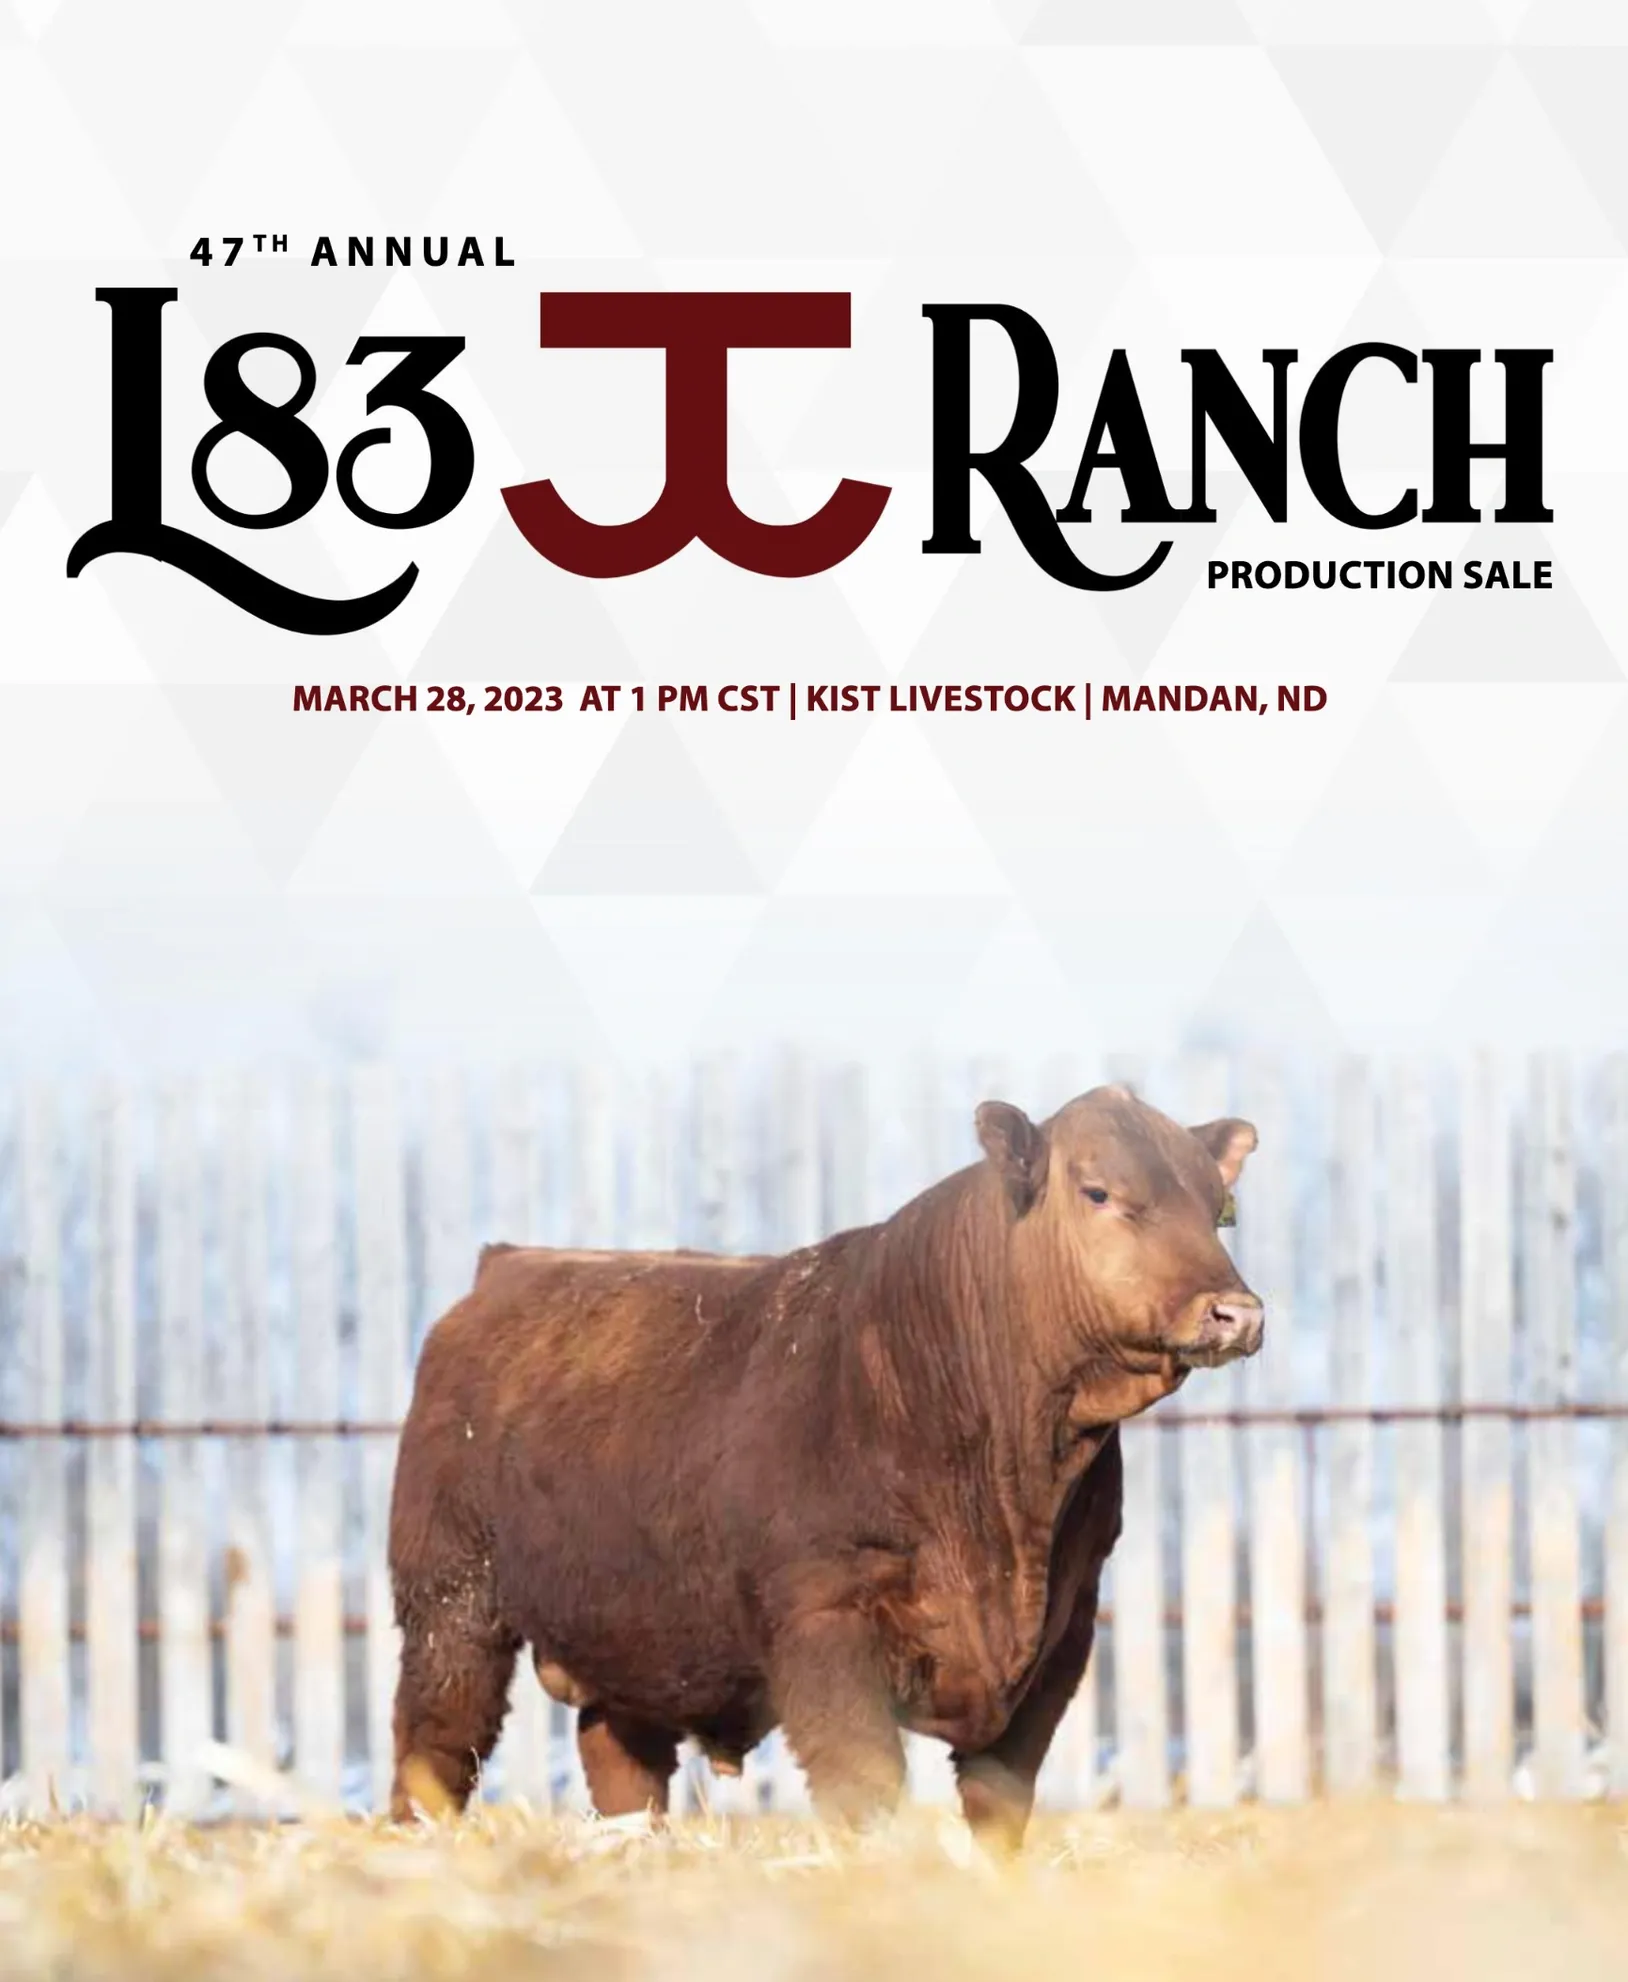 L83 Ranch – Lodoen Cattle Company Production Sale